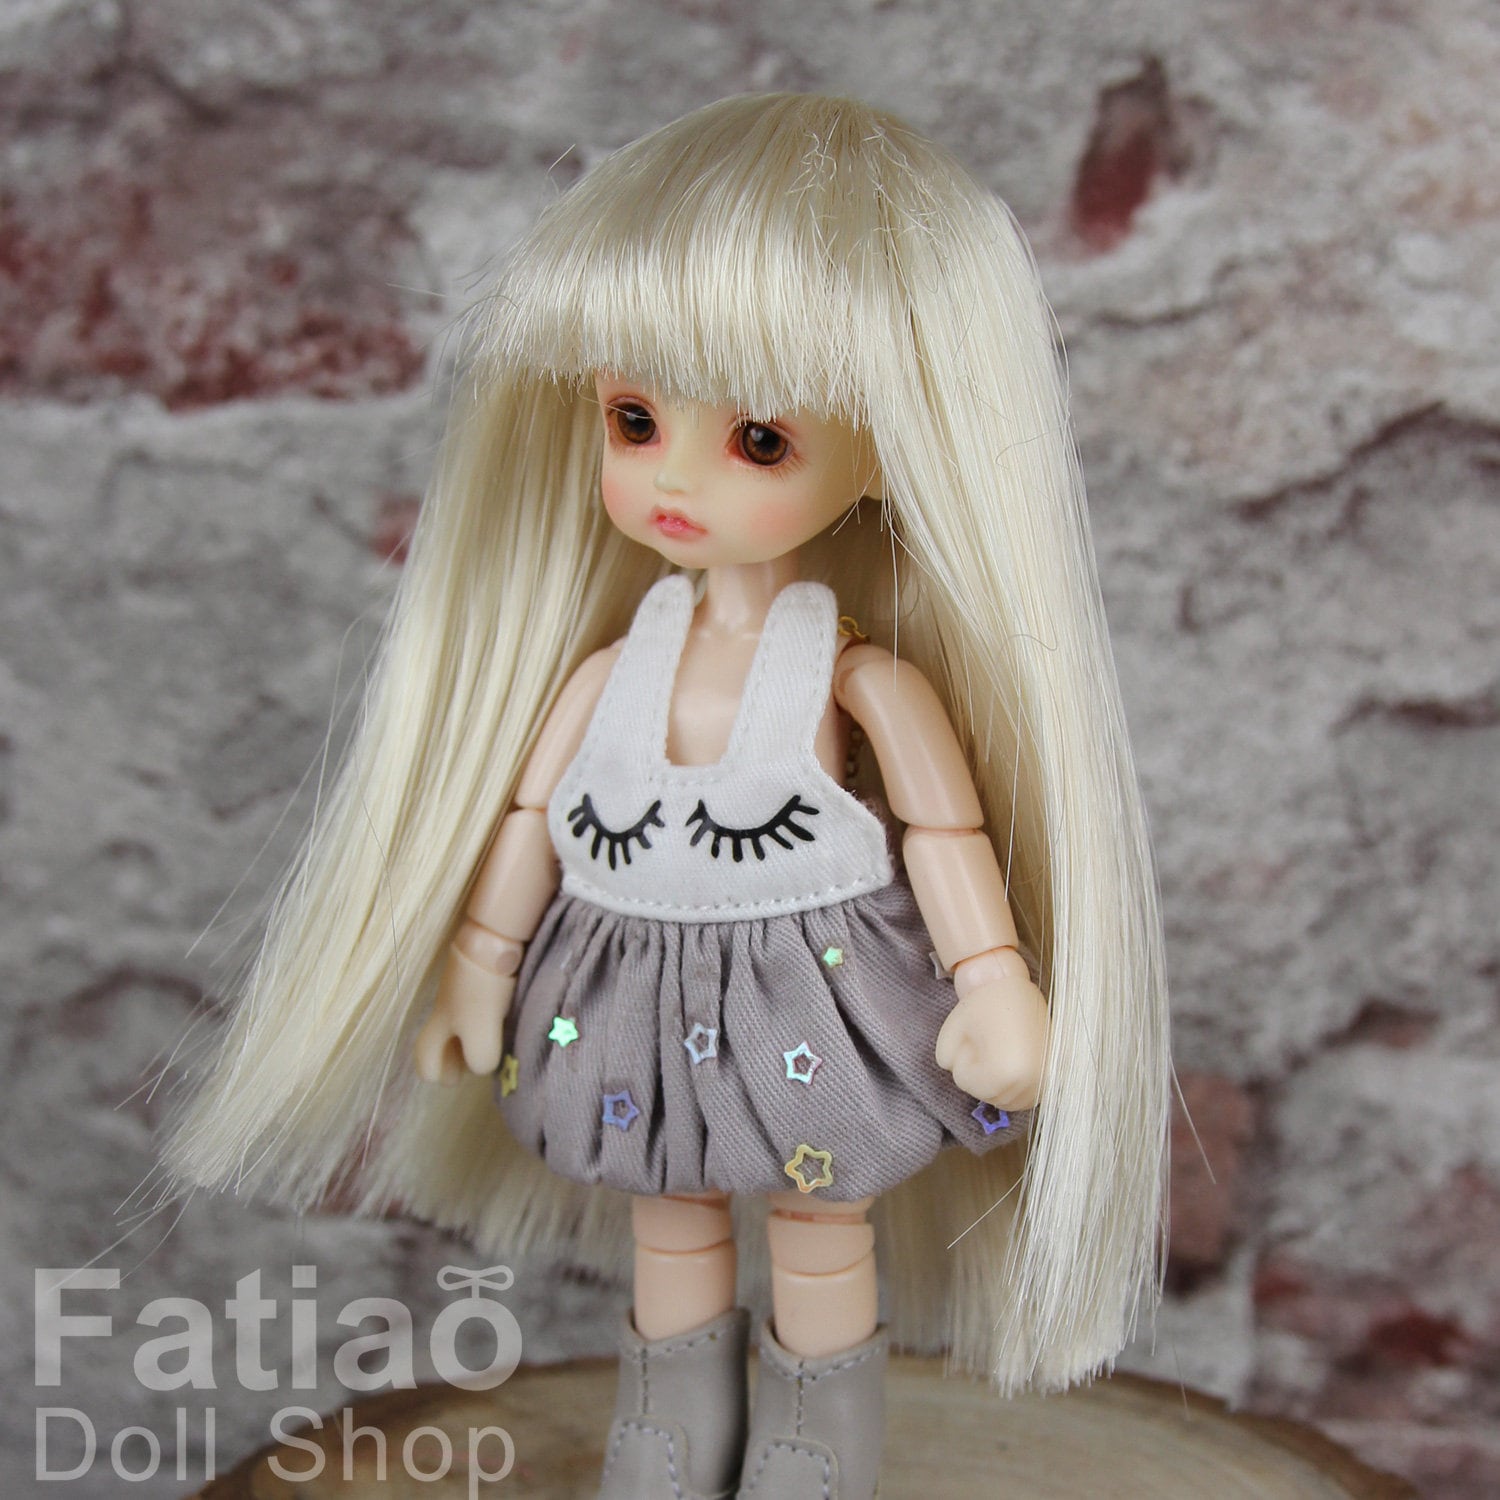 Fatiao Pink & White New BJD Dollfie pukipuki brownie 4 Doll Wig